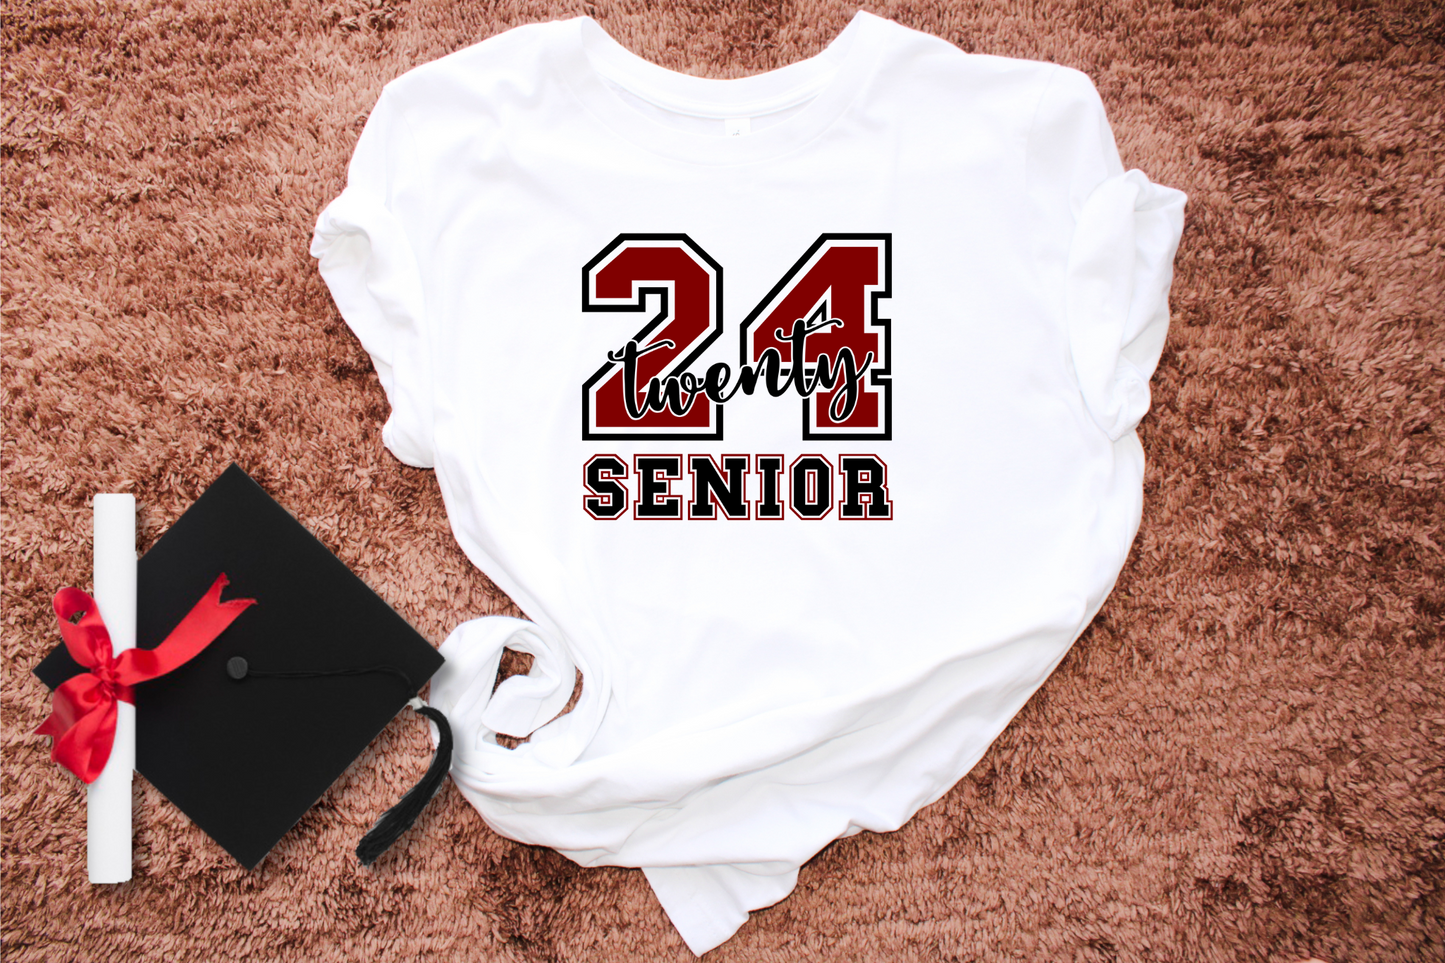 Senior Twenty 24 Collection